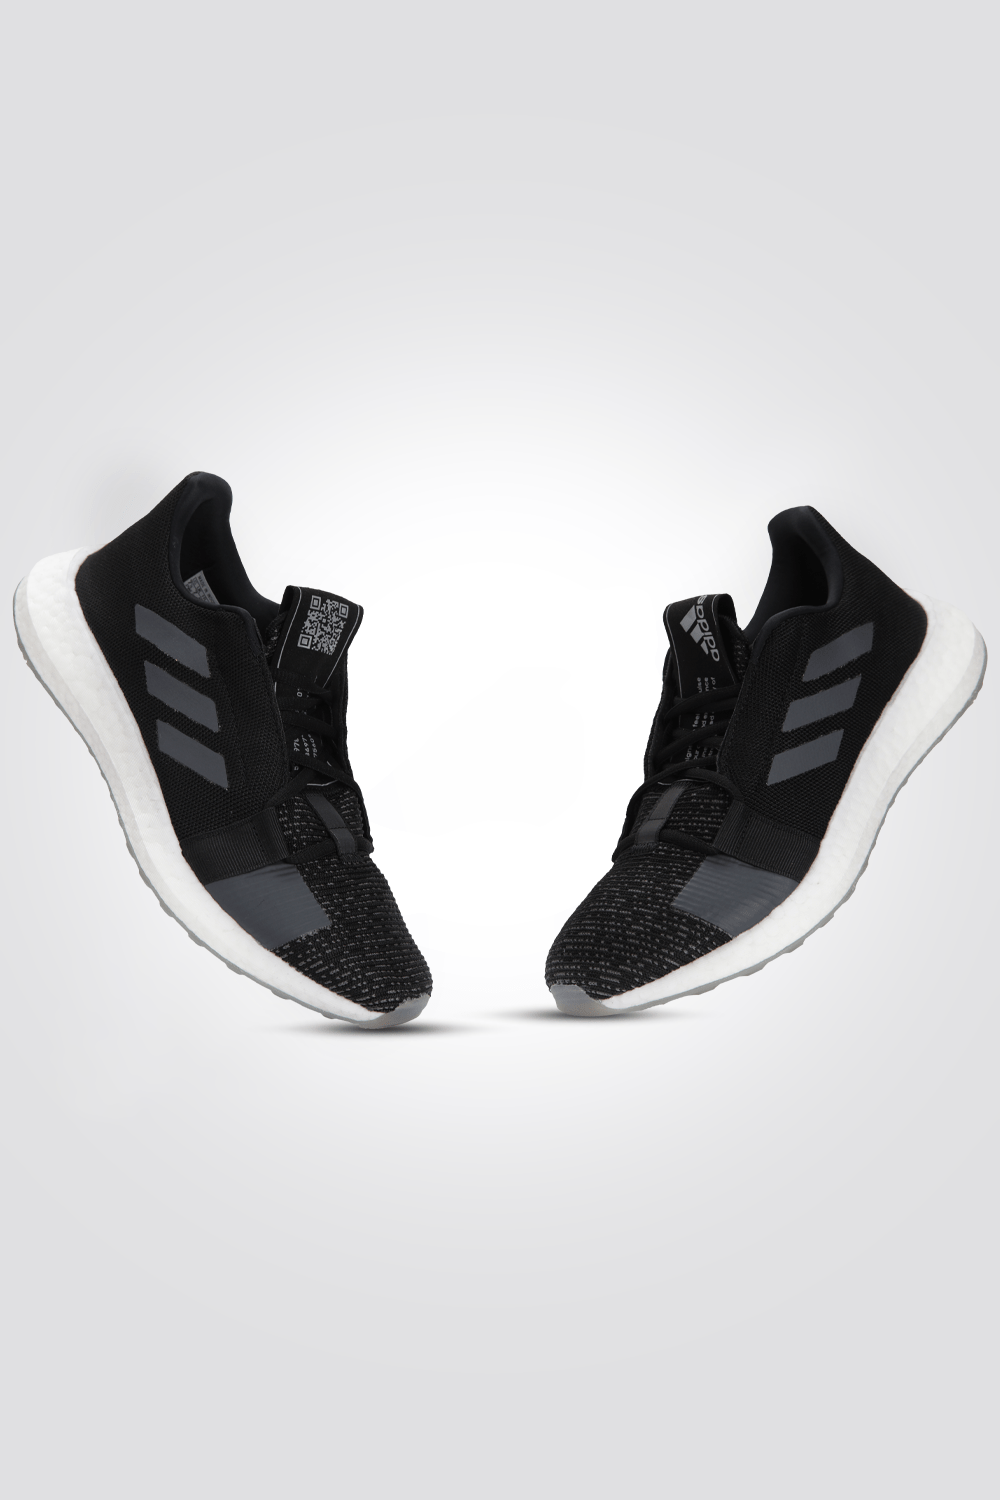 ADIDAS - נעלי ספורט לגברים SENSEBOOST GO בצבע שחור ואפור - MASHBIR//365